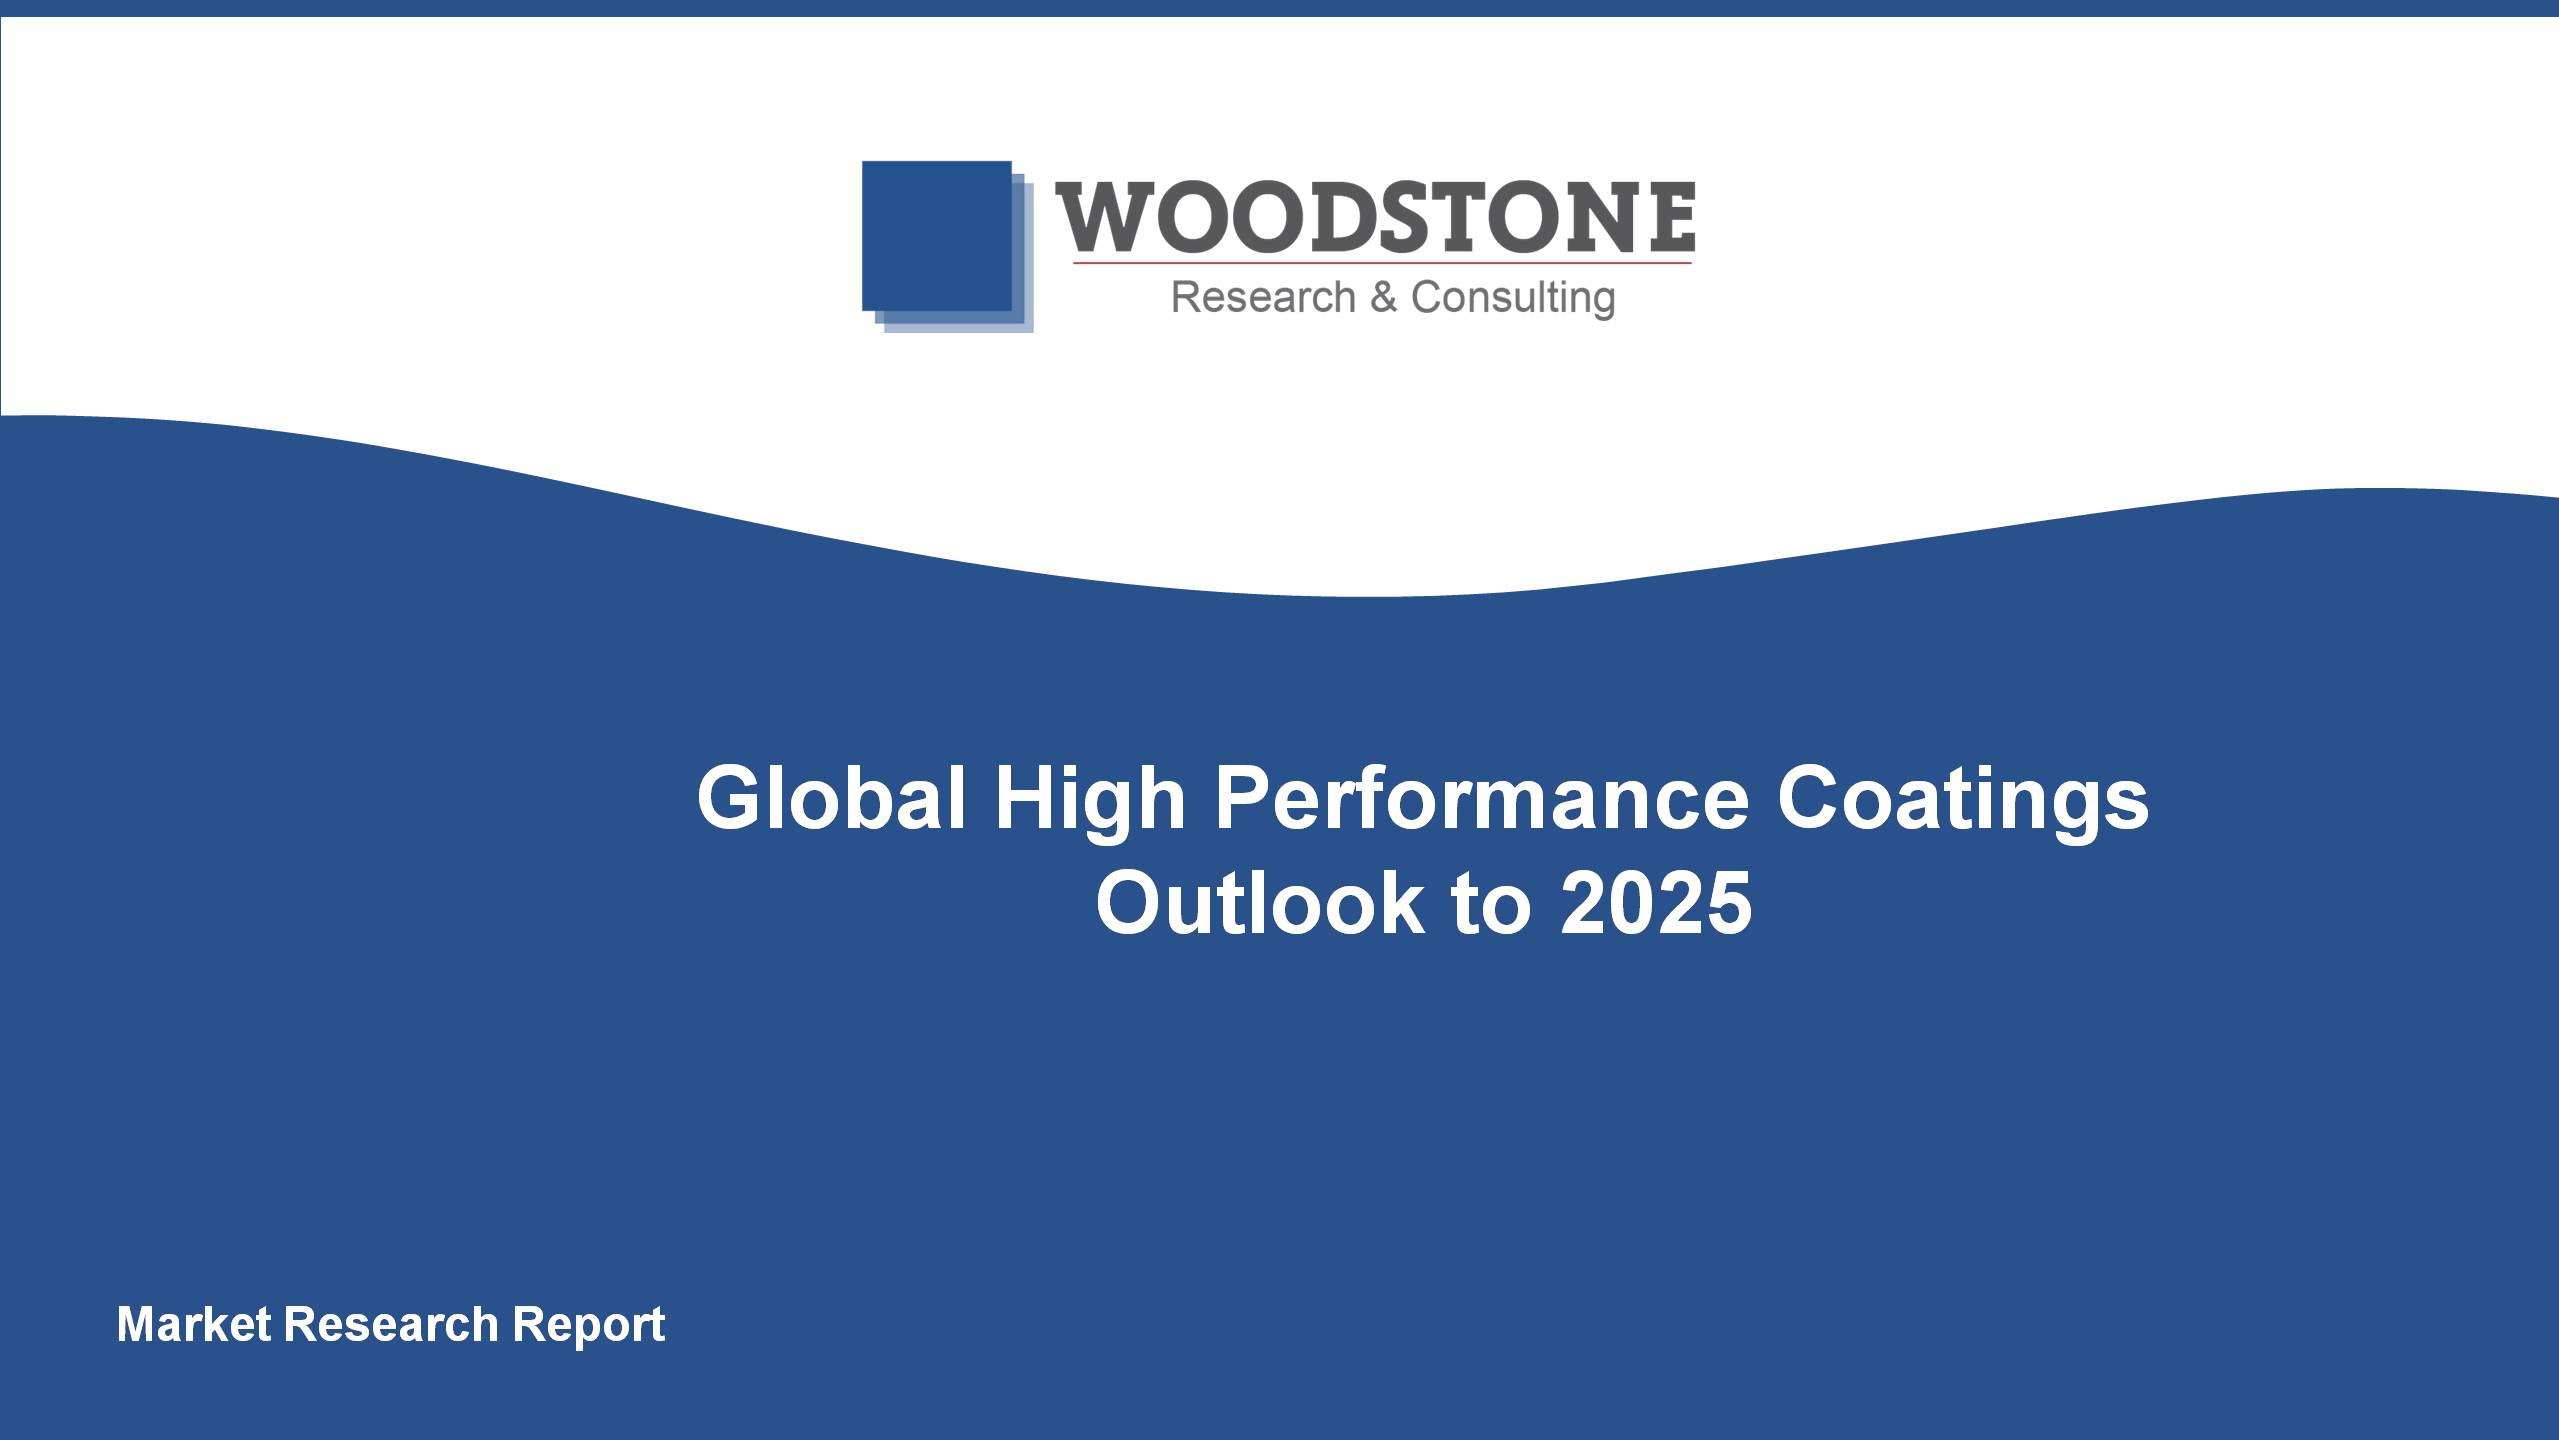 Global High Performance Coatings Market Outlook to 2025